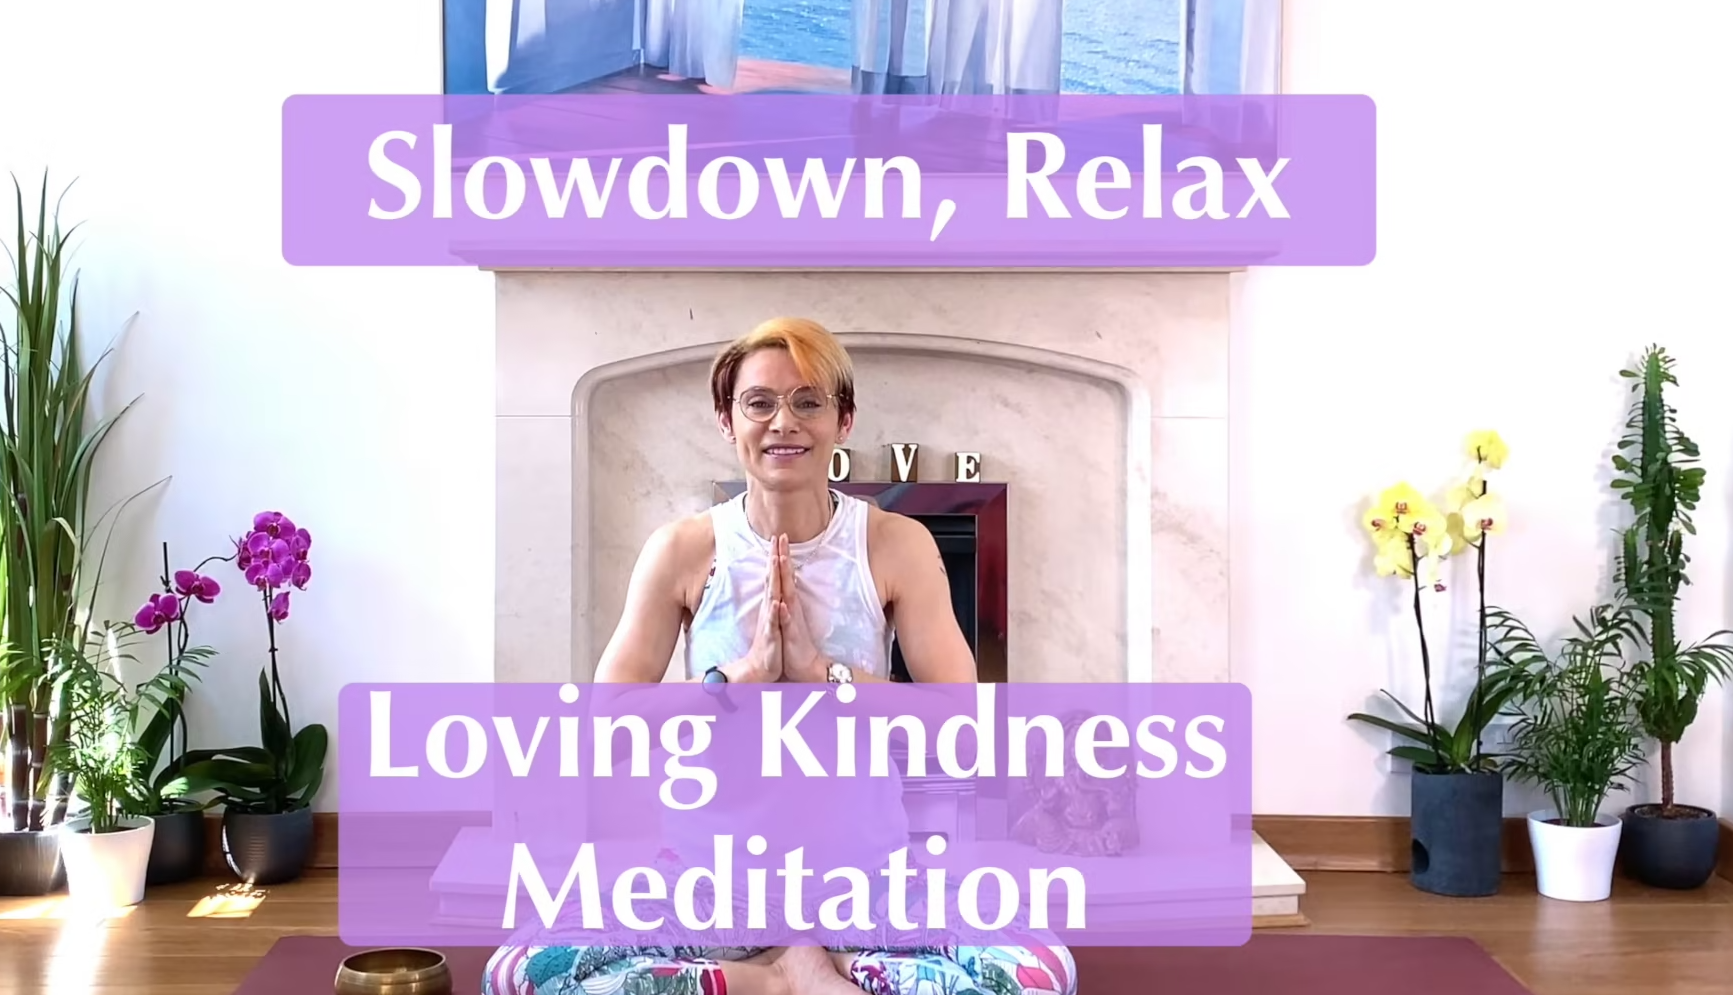 Olga Oakenfold - Slowdown, Relax with Loving Kindness Meditation